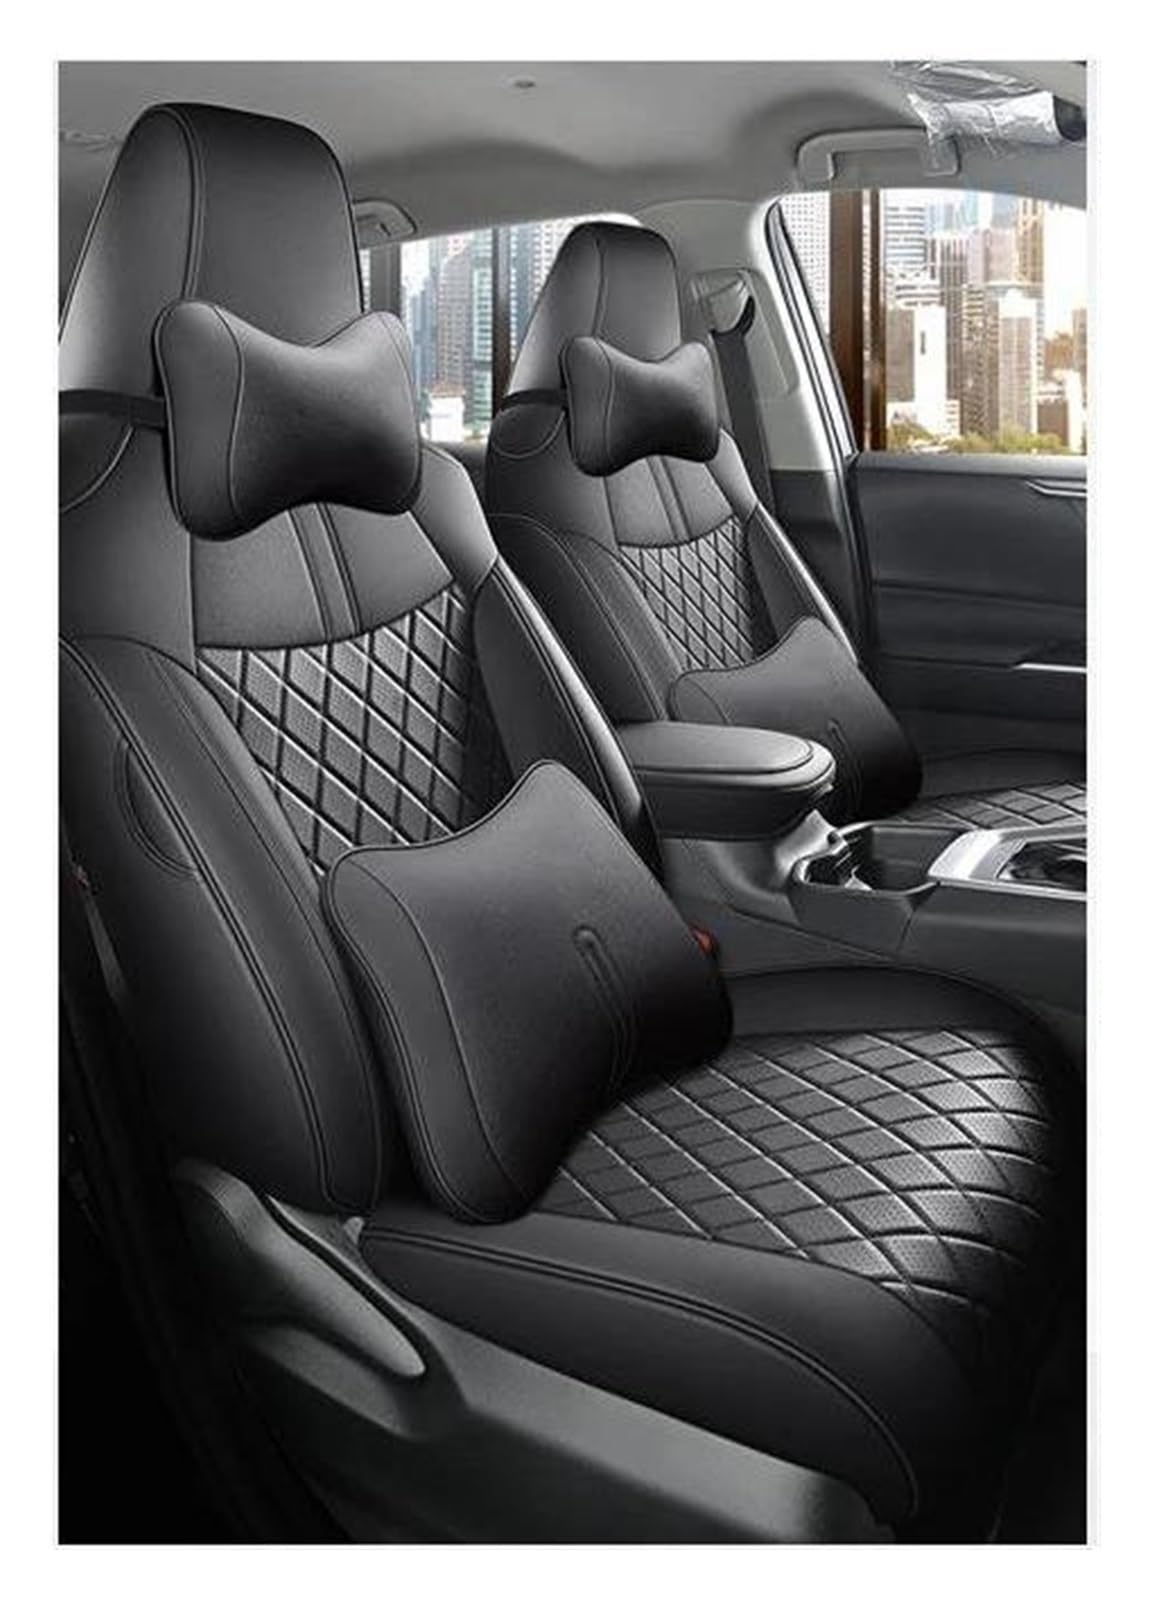 FOGJCMET Auto-Sitzbezüge Leder Automotive Kissen Autositzbezüge Für Toyota Für Select Für RAV4 2019 2020 2021 2022 2023 Autositzschoner(Black) von FOGJCMET